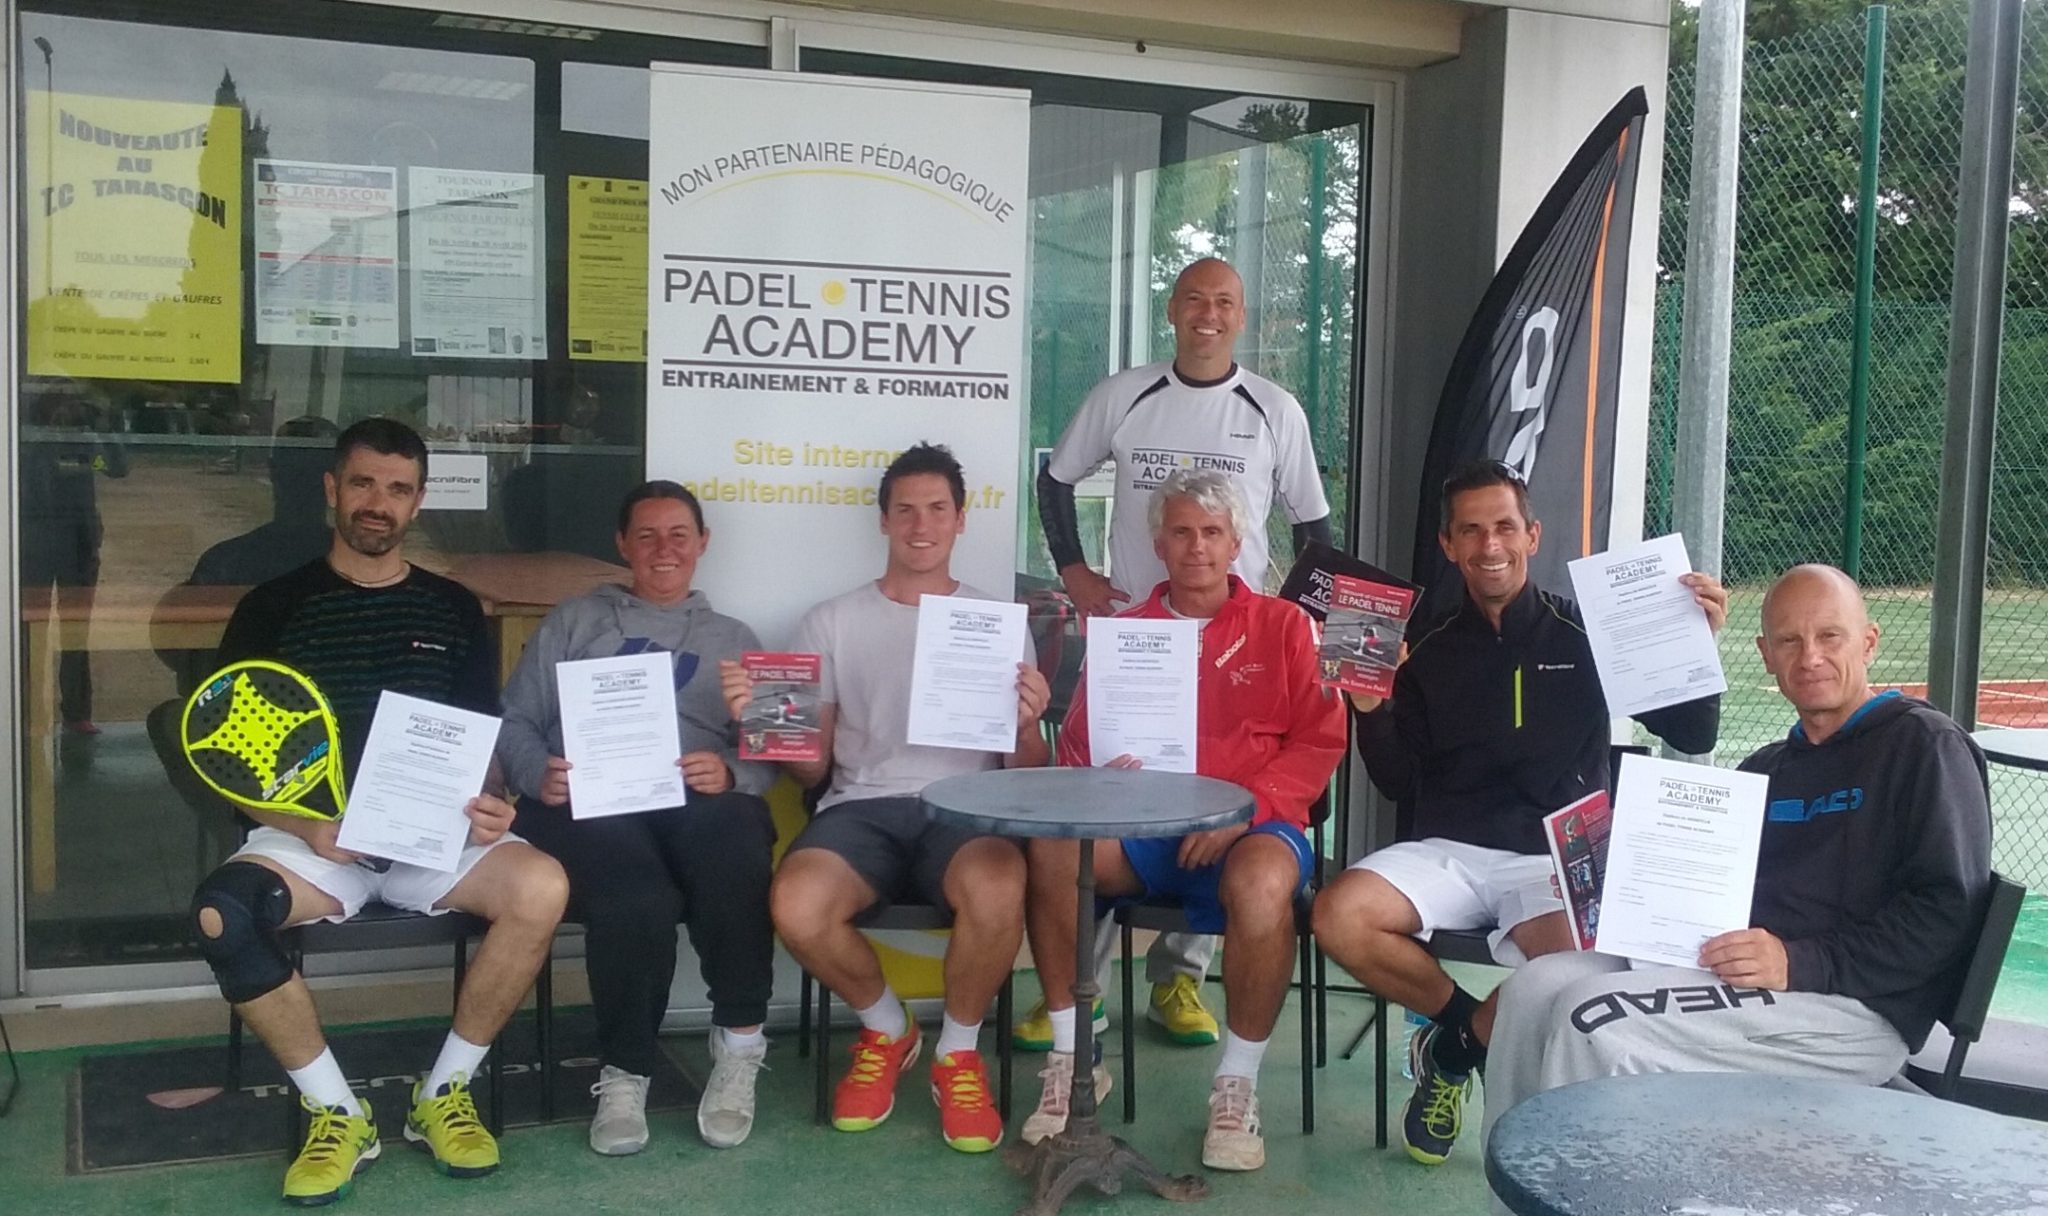 inauguration of the Tarascon Tennis Club with Padel Tennis Academy